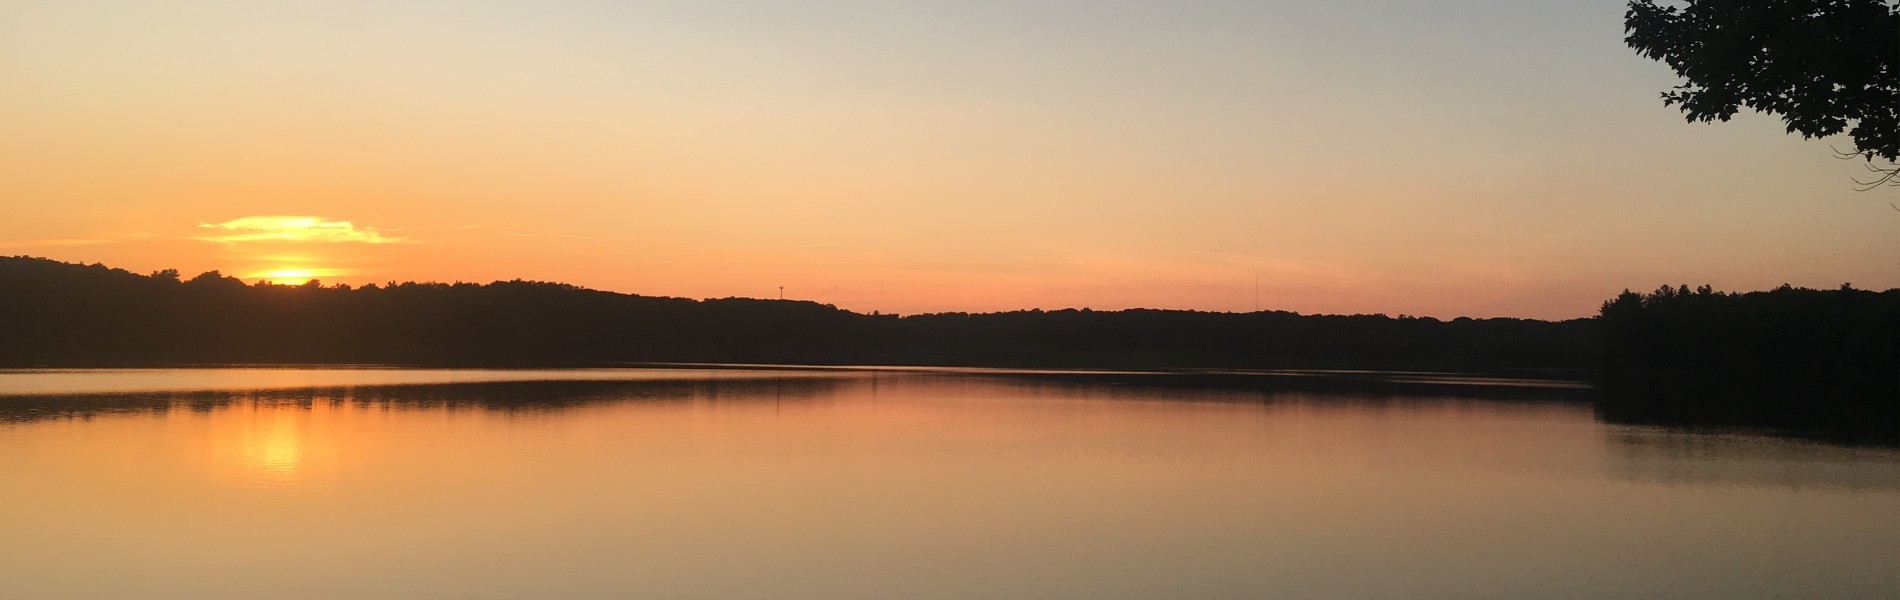 View from Boxford of Massachusetts lake